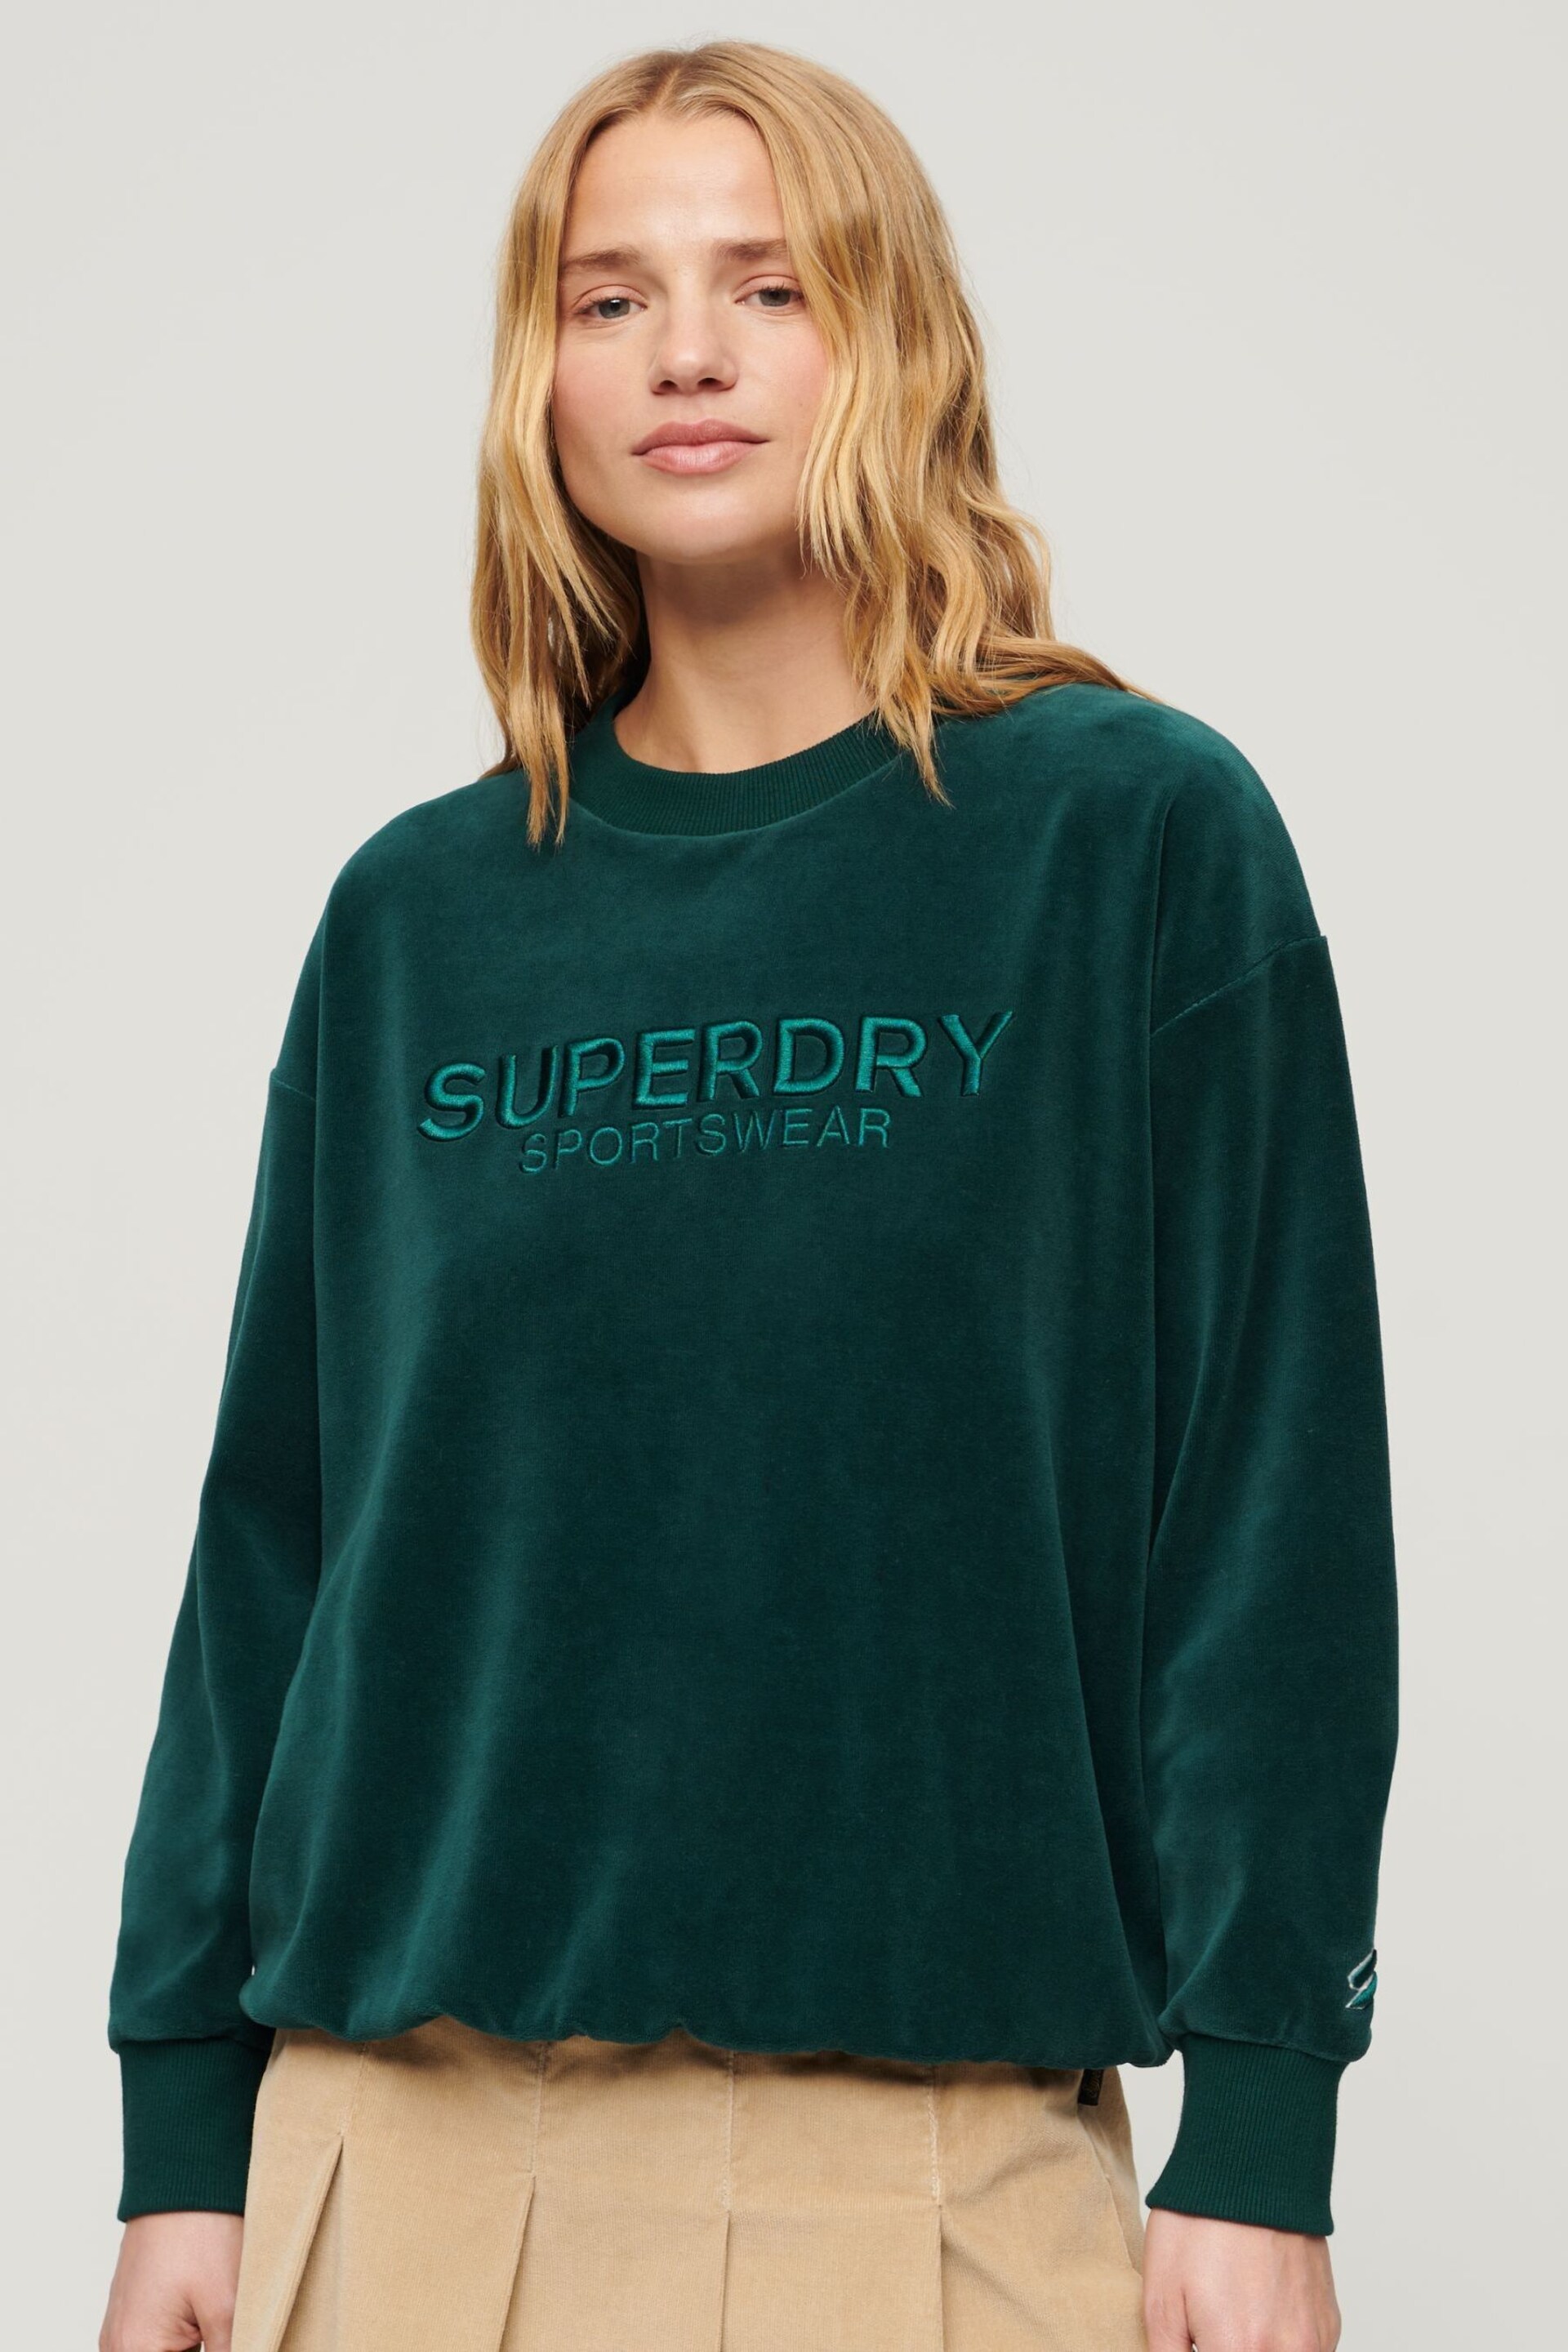 SUPERDRY Green SUPERDRY Velour Graphic Boxy Crew Sweatshirt - Image 1 of 6